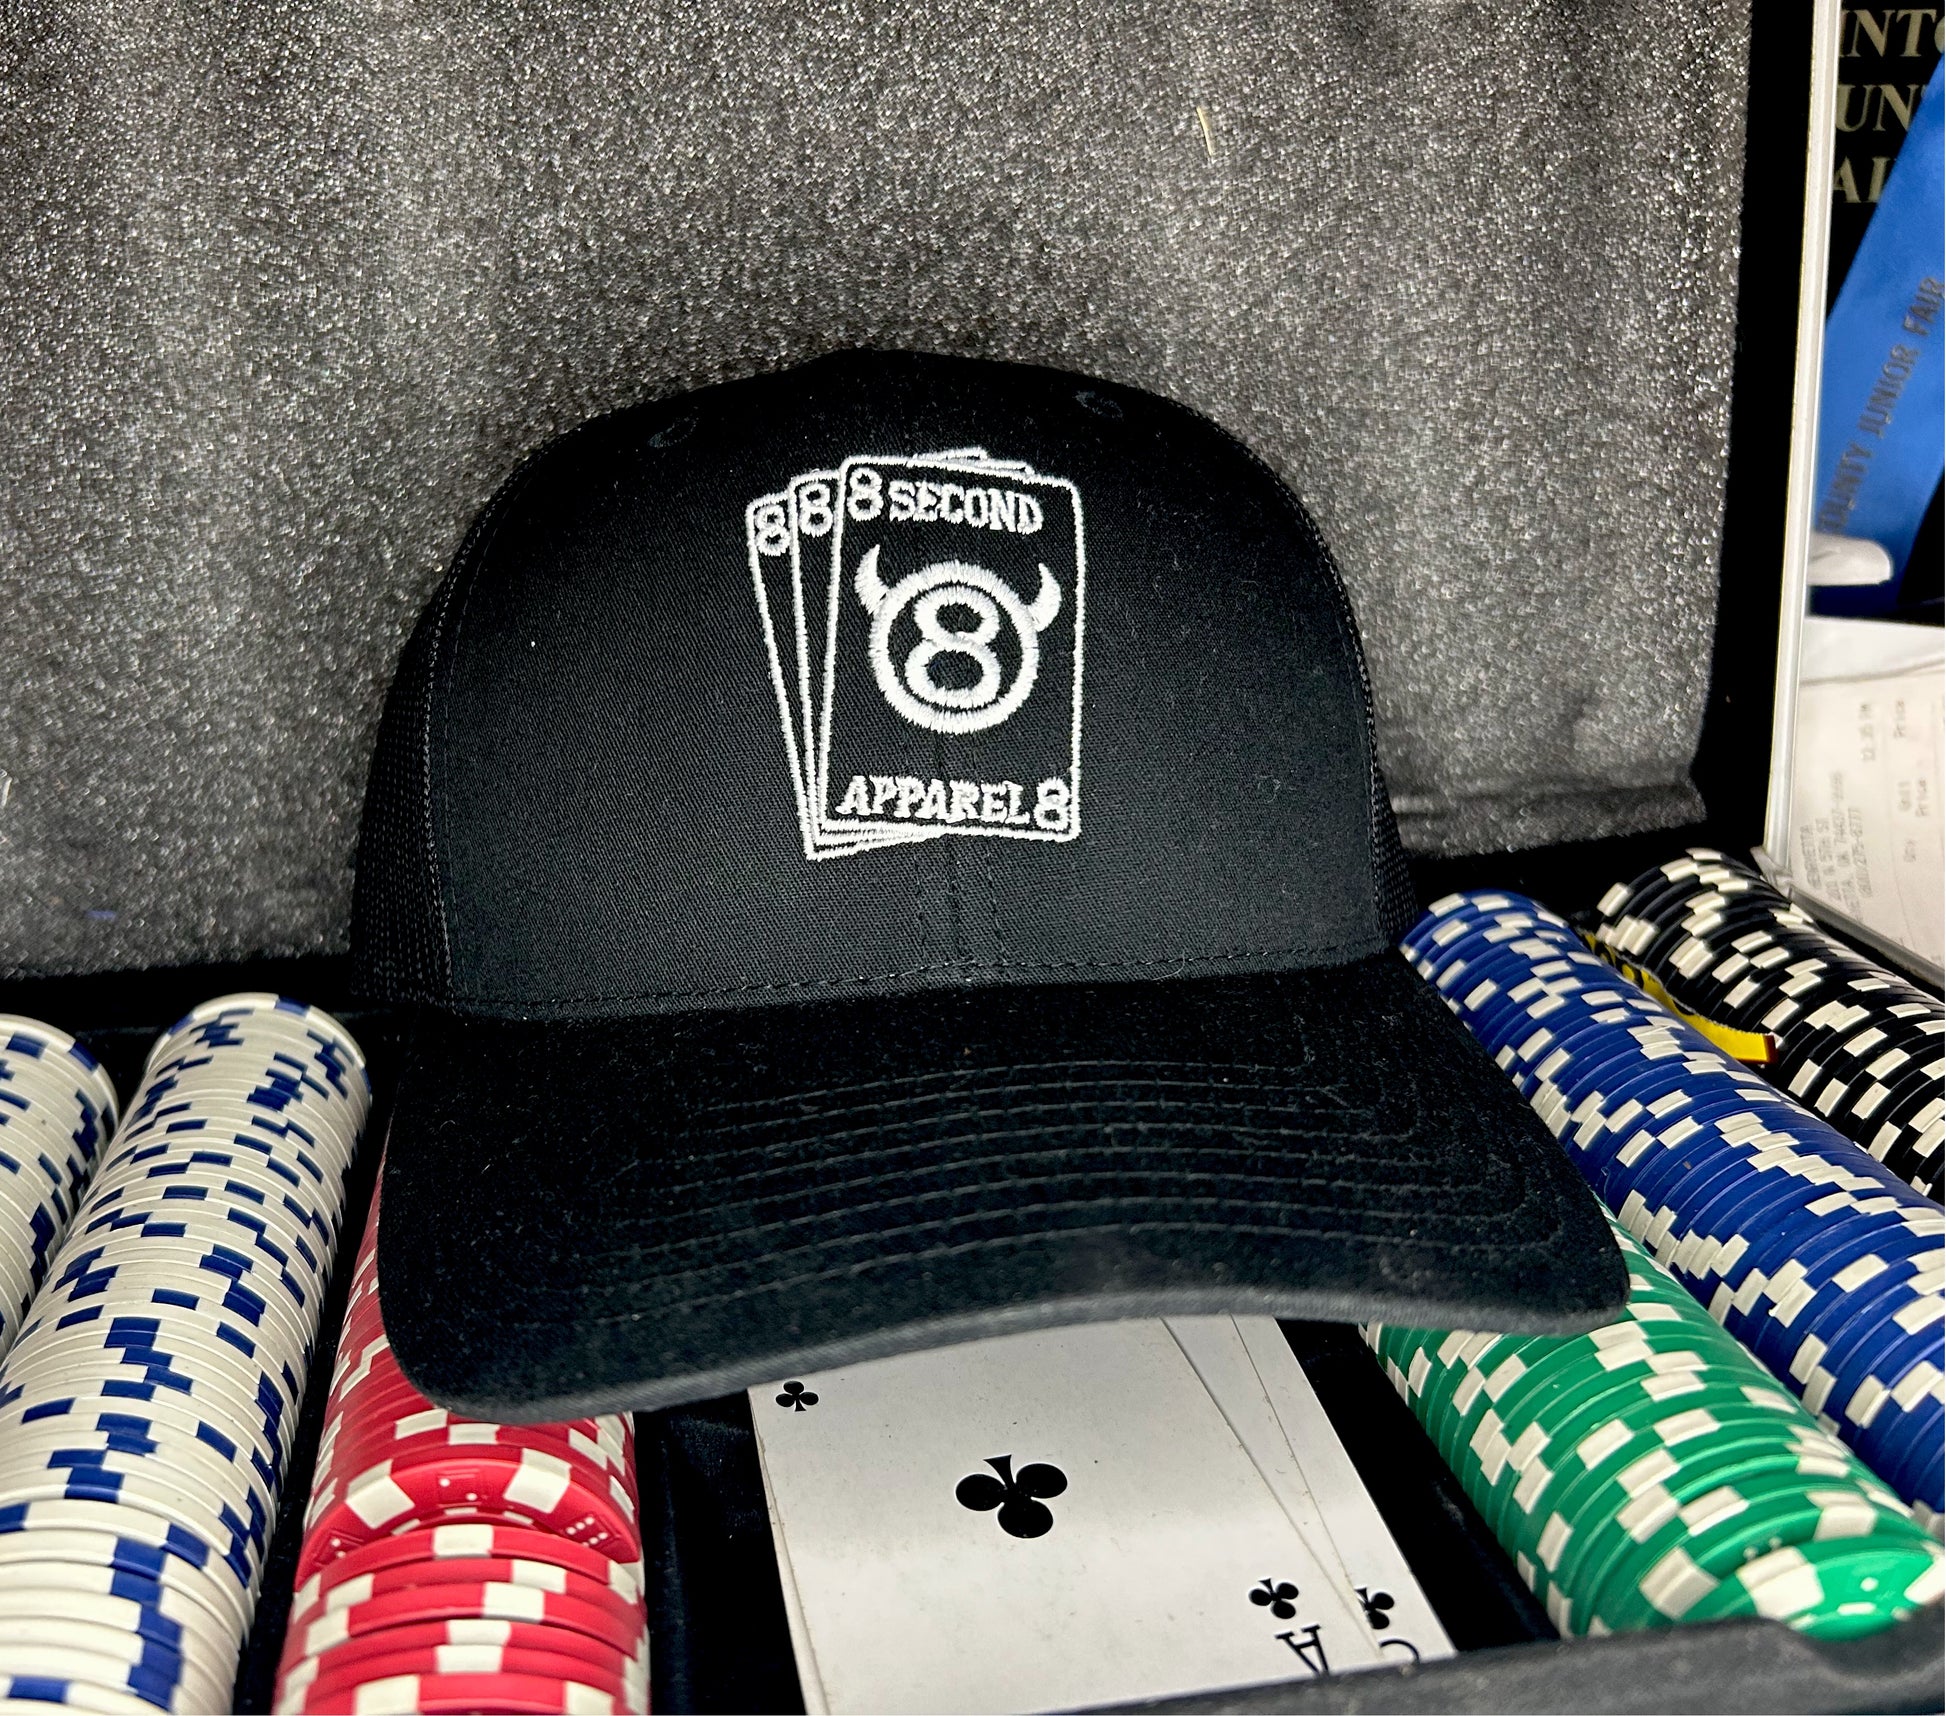 Western Way Gambler Hat, Black – Everyday Chic Boutique